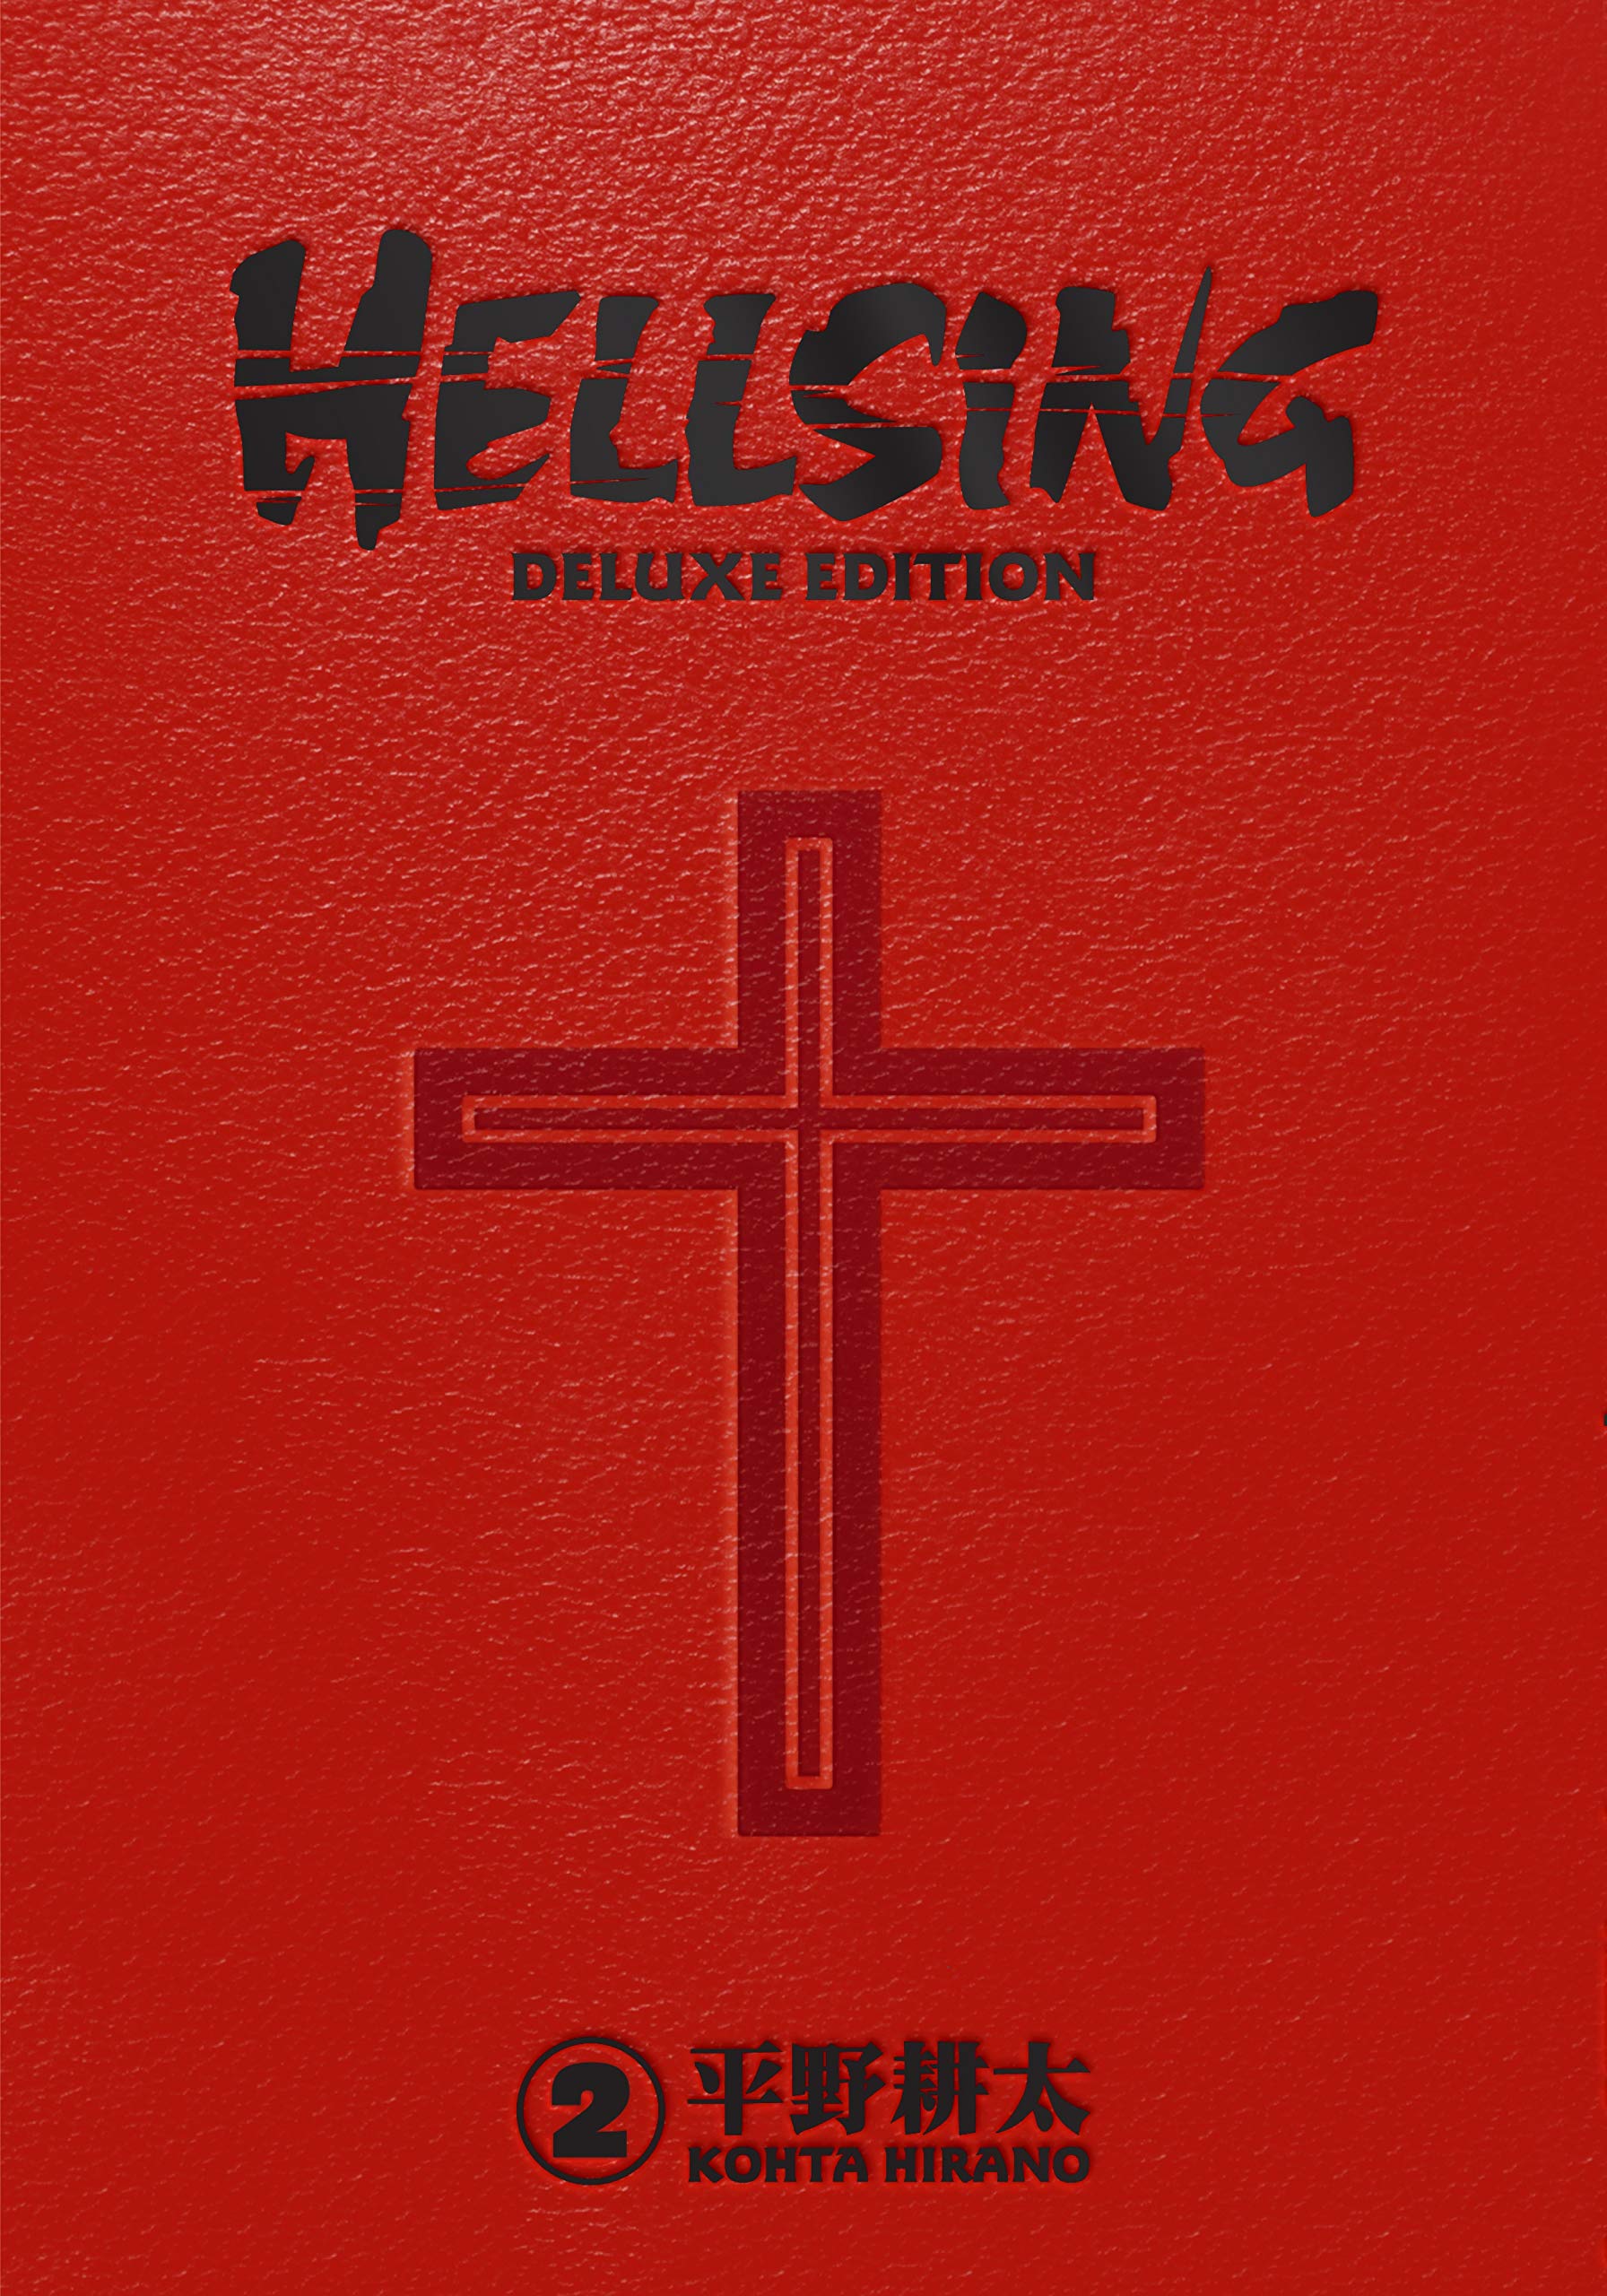 Hellsing: Deluxe Edition - Volume 2 | Kohta Hirano